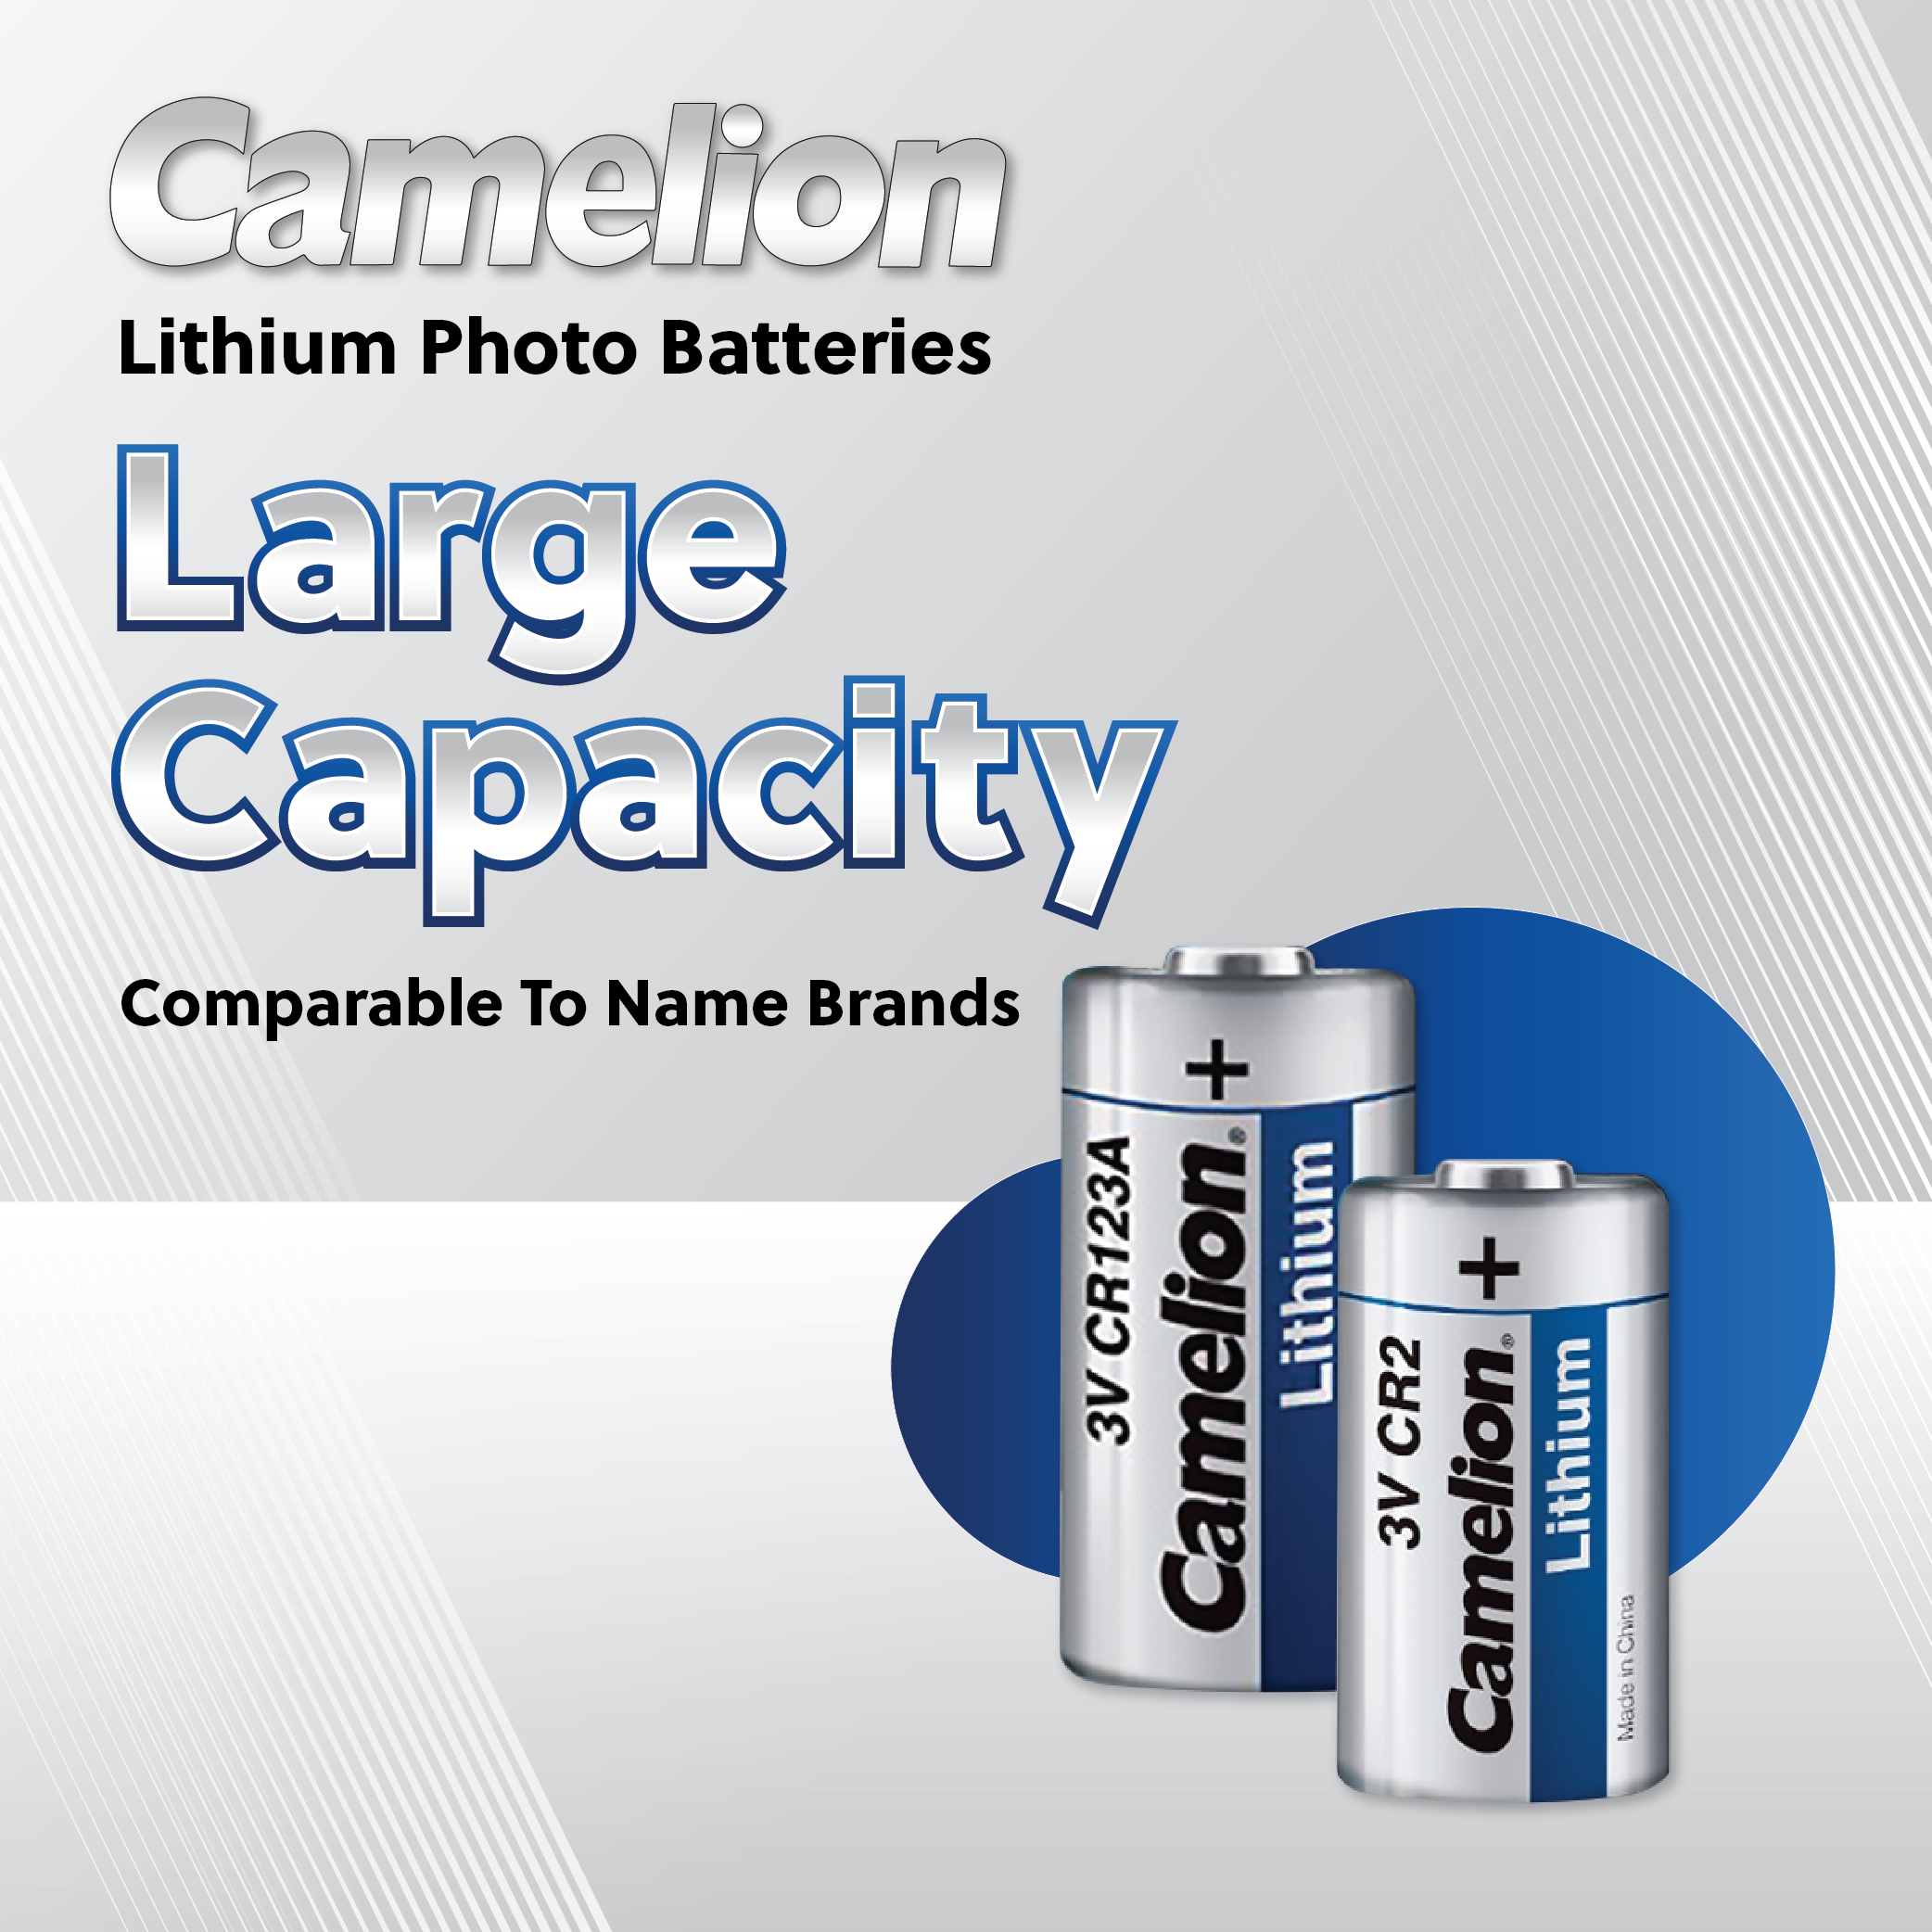 Camelion CR2 3V Lithium